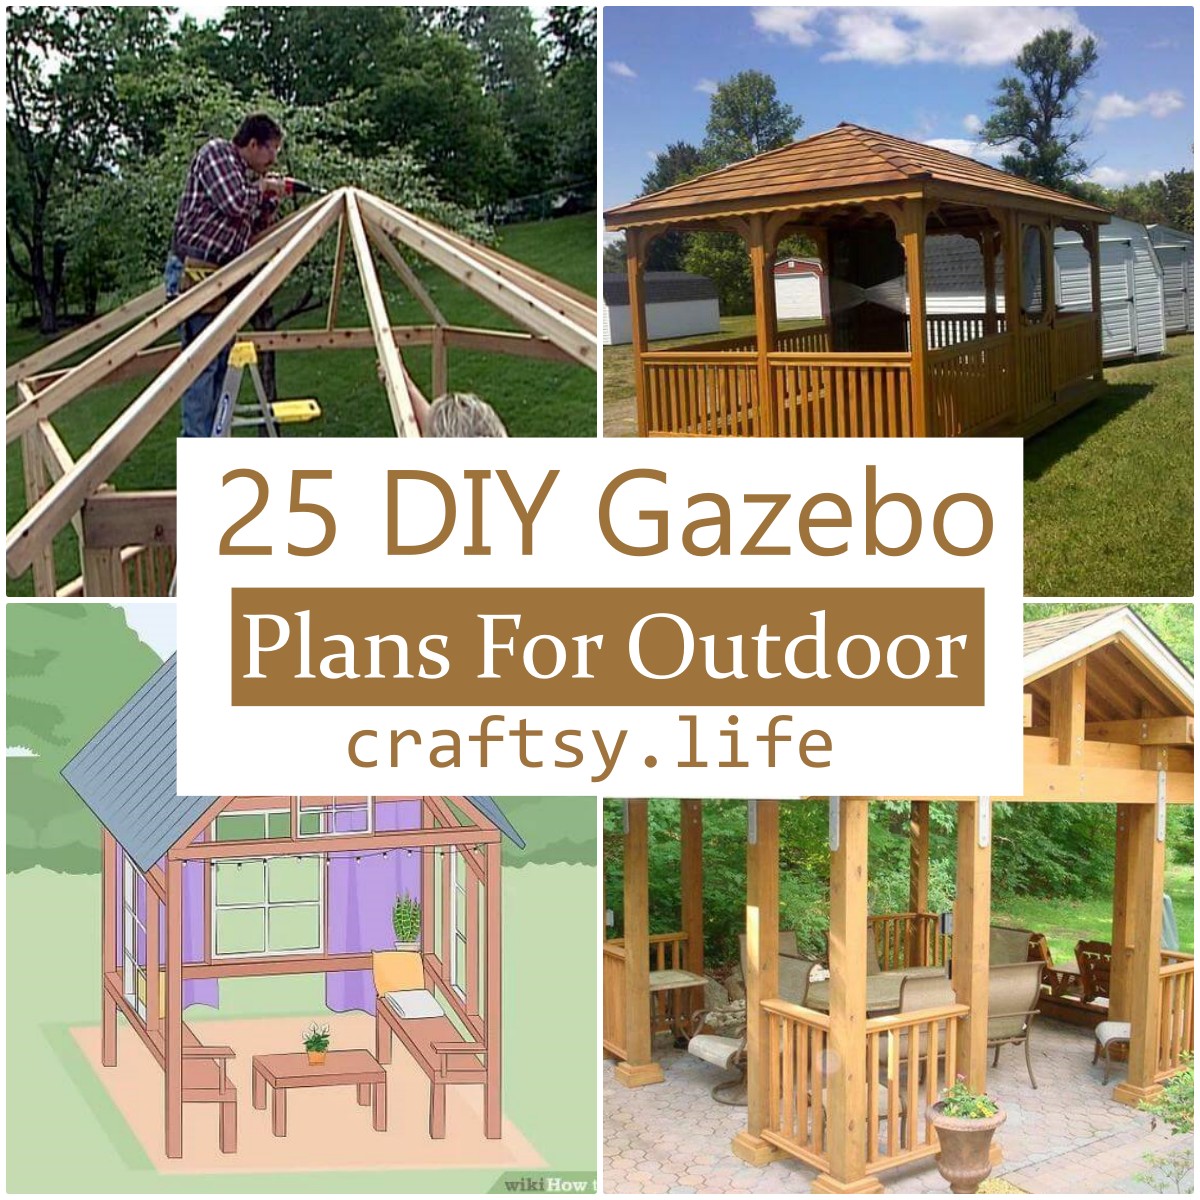 25 DIY Gazebo Plans For Outdoor